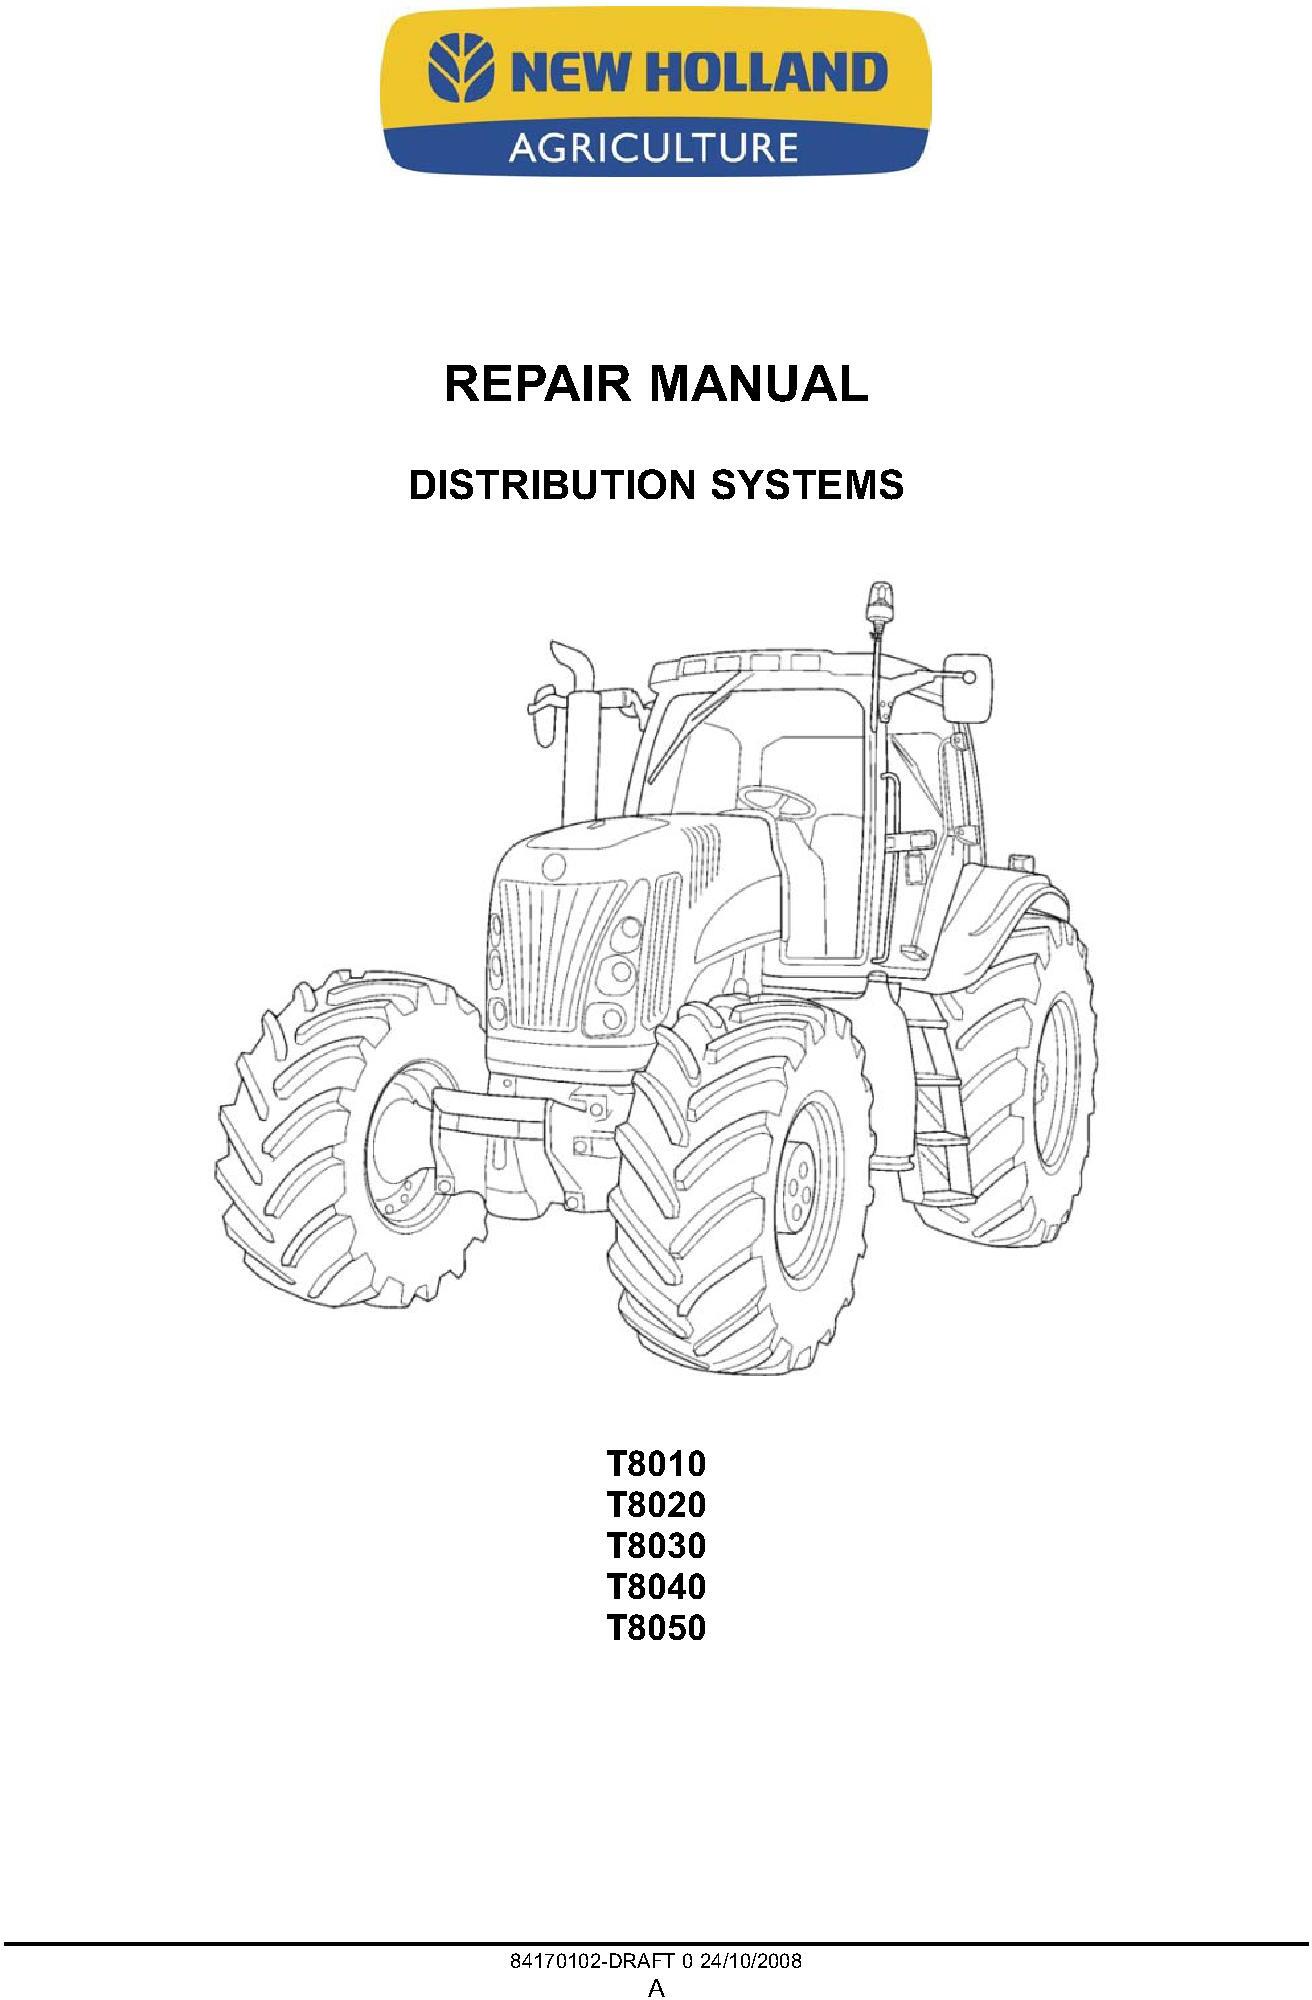 New Holland T8010, T8020, T8030, T8040, T8050 Series Tractors (PIN. Z7RW05000-) Service Manual - 1